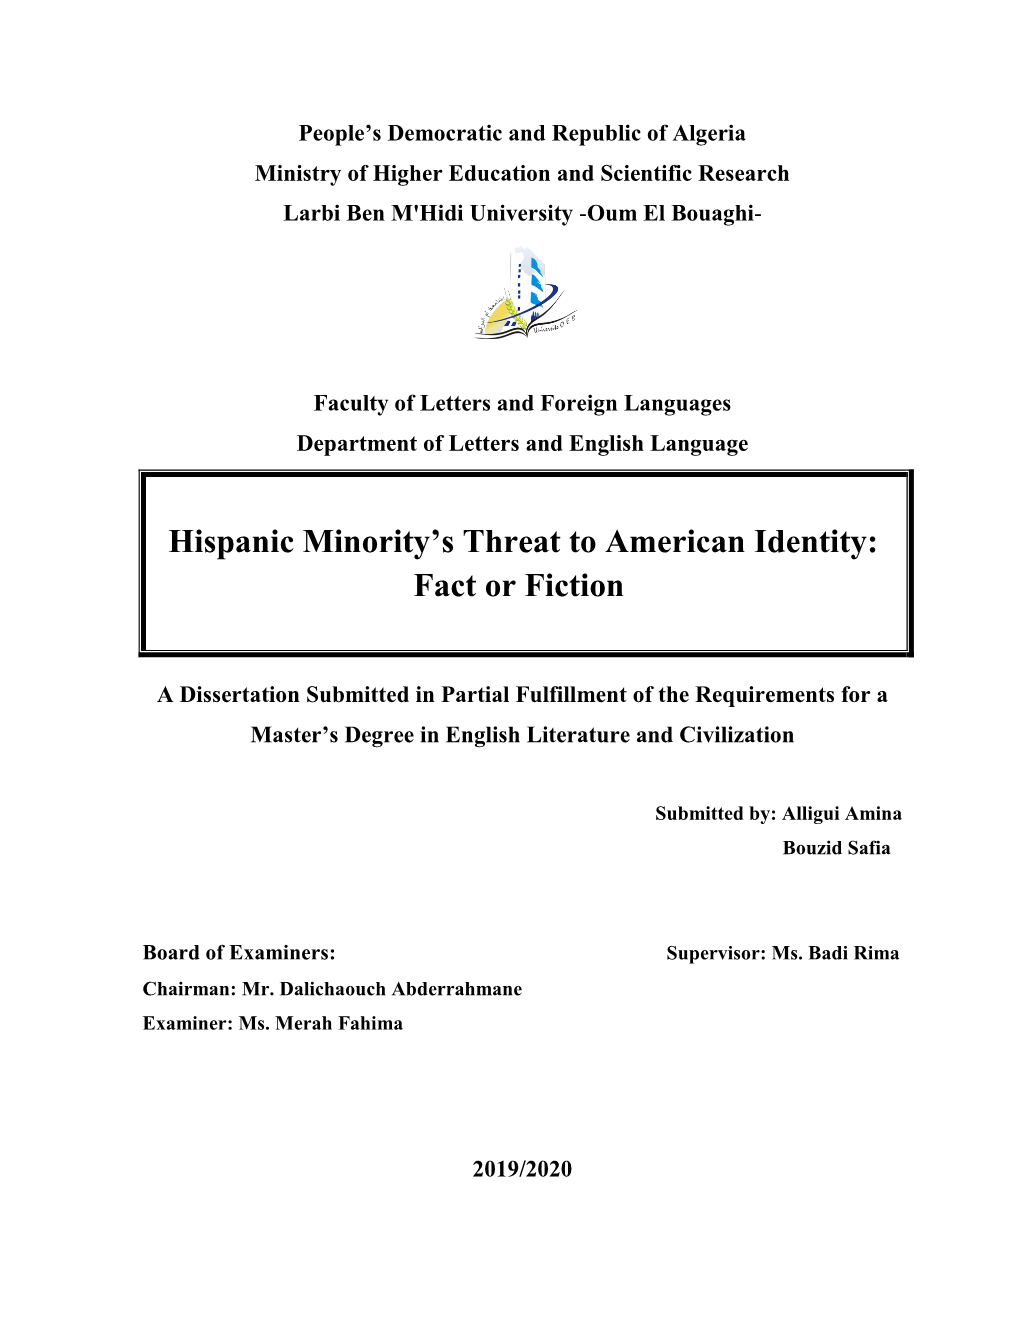 Hispanic Minority's Threat to American Identity: Fact Or Fiction